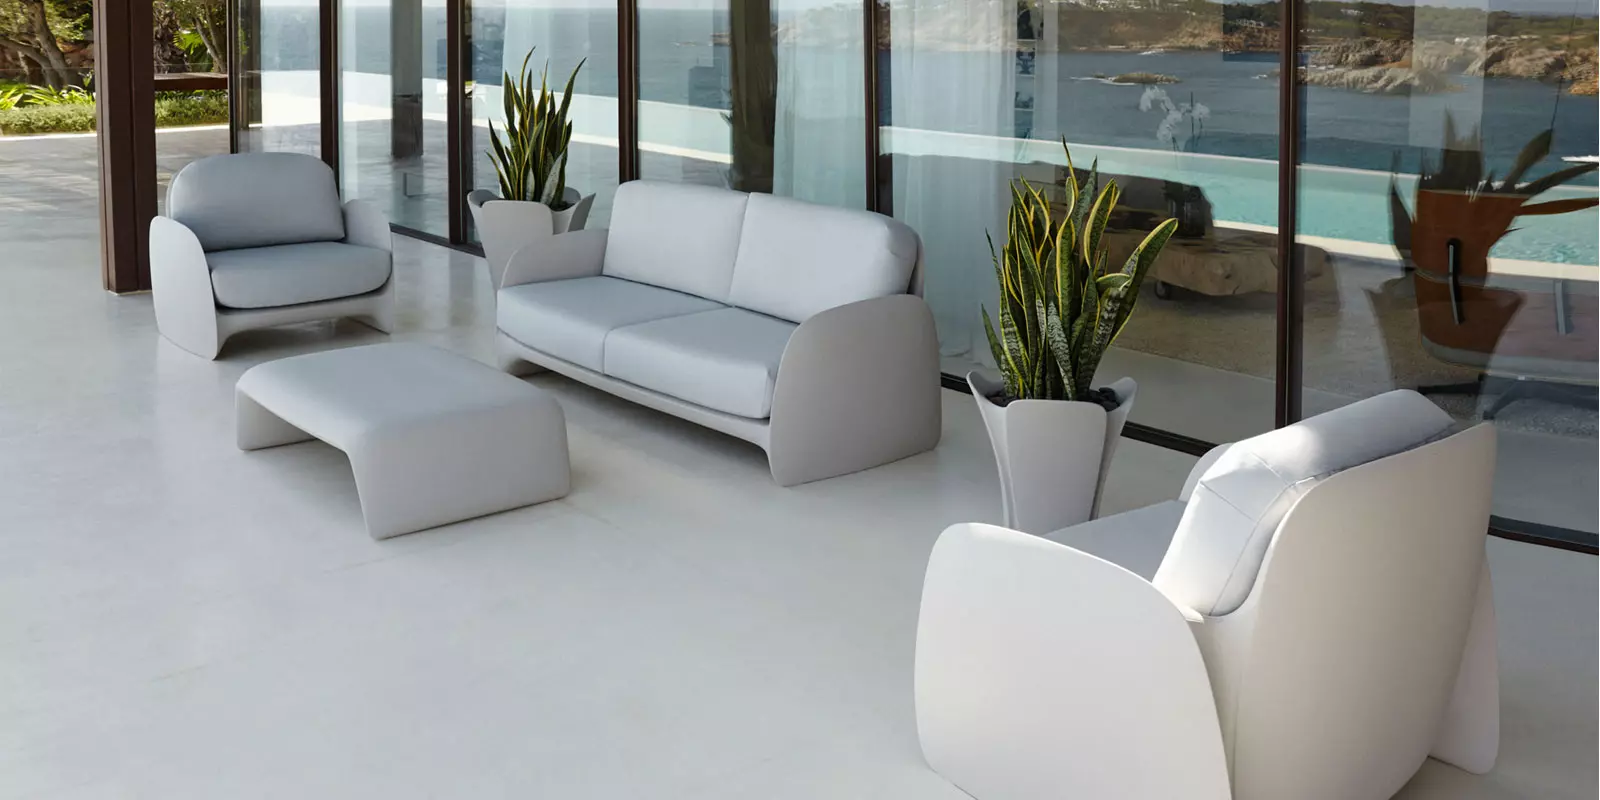 design-outdoor-furniture-sofa-armchair-table-design-planters-pezzettina-archirivolto-vondom (2) copie